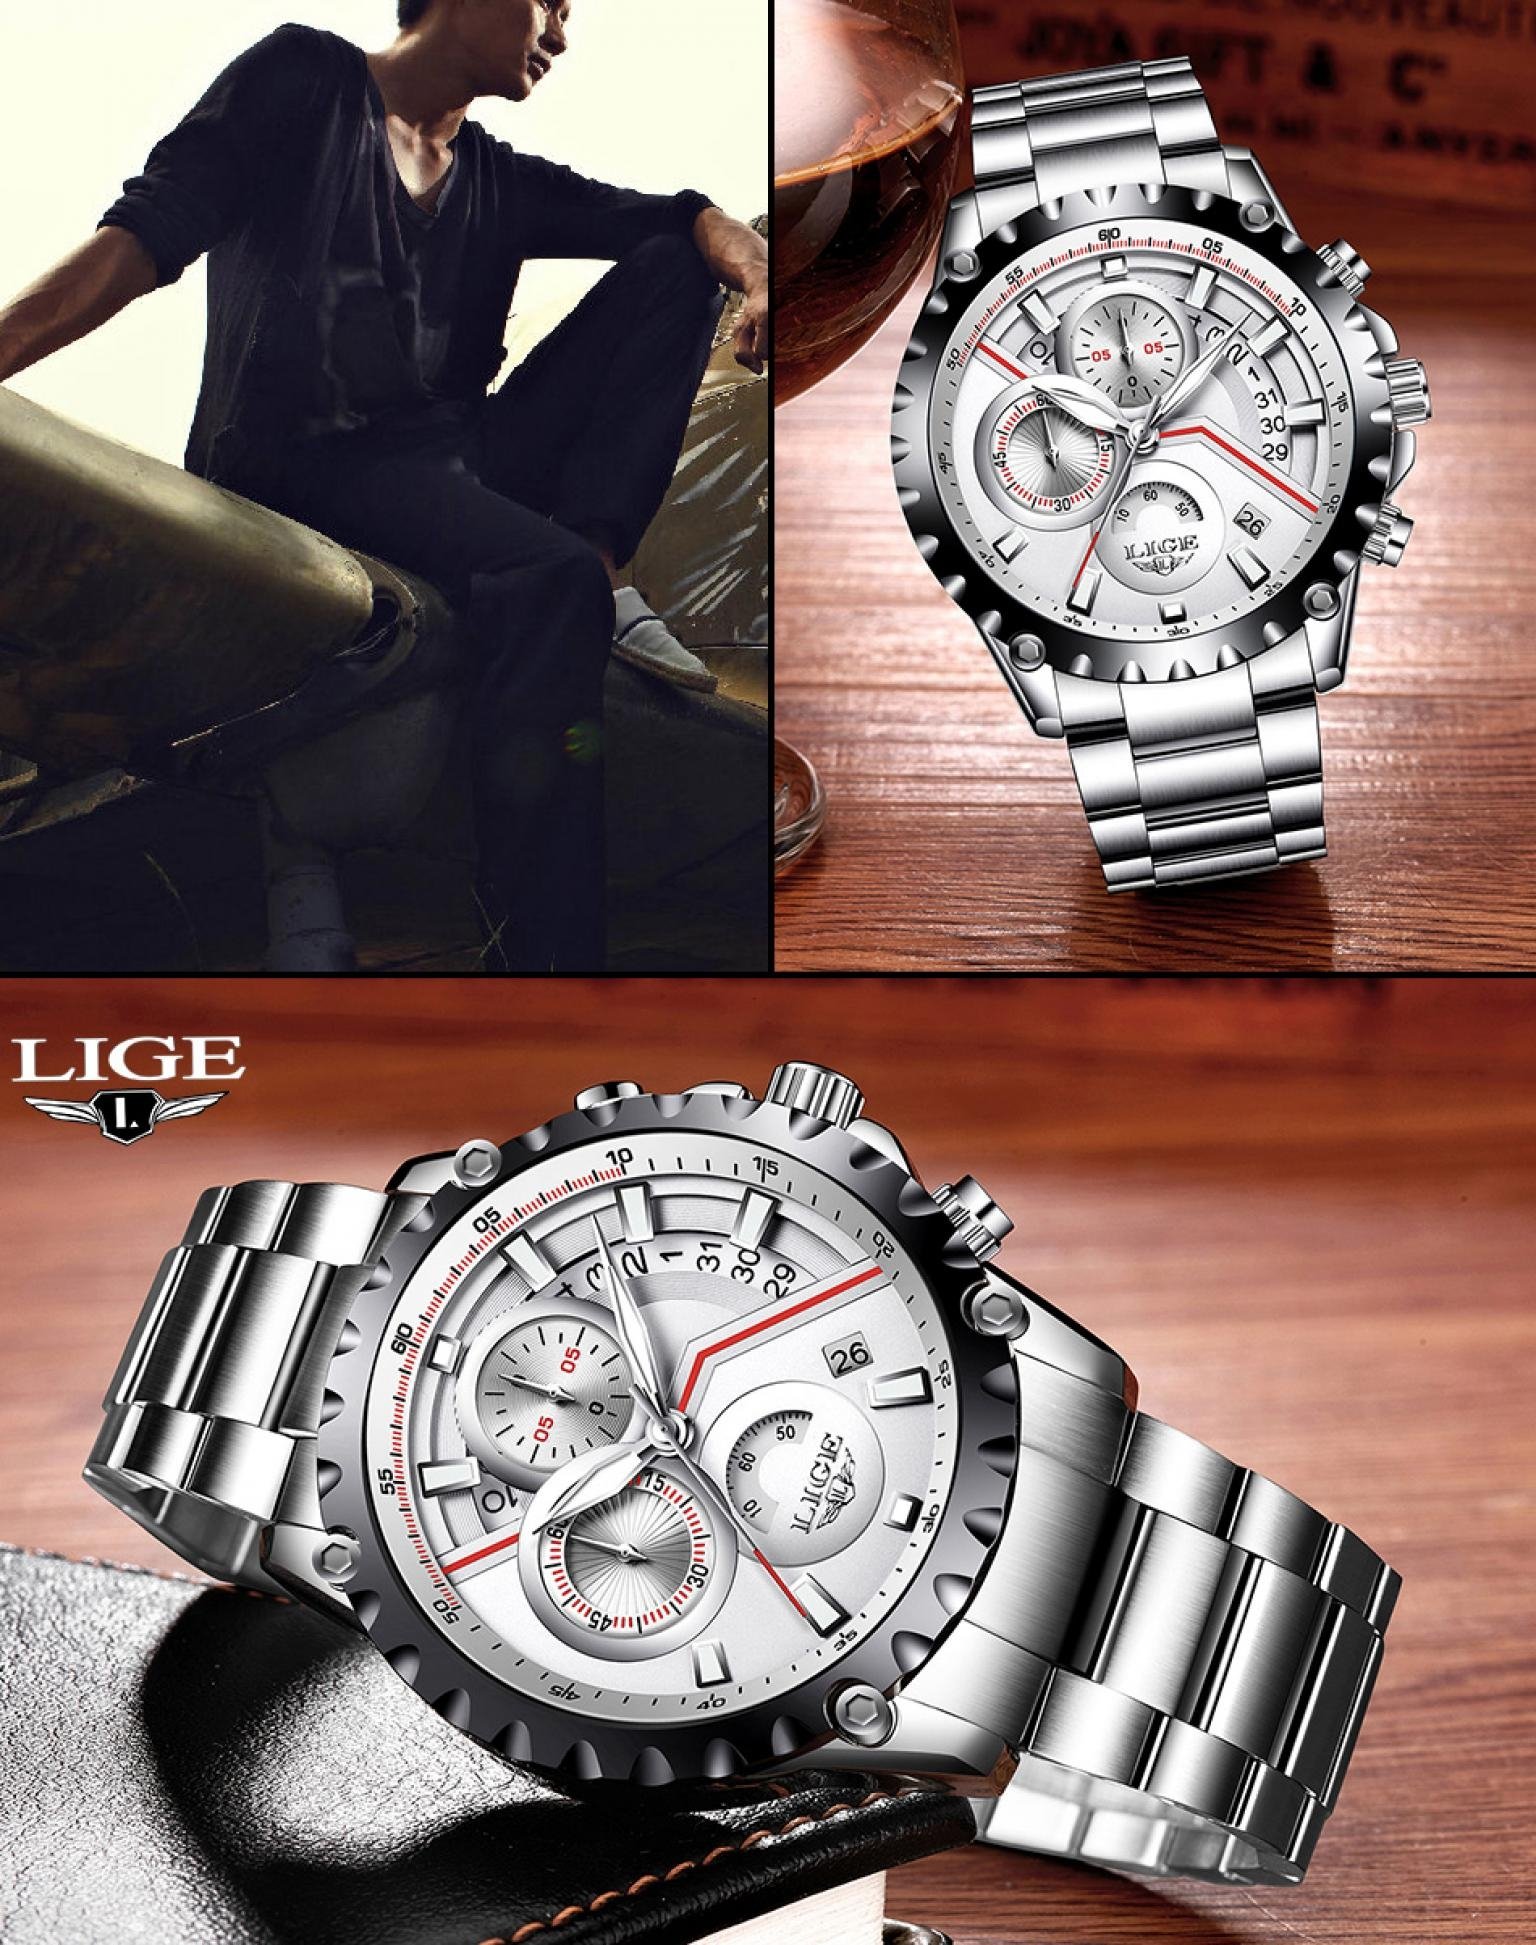 LIGE  OriginalTop Brand Luxury Men's Watches Fashion Business Leather Quartz Watch Men Military Waterproof Sport Relogio Masculino 9838